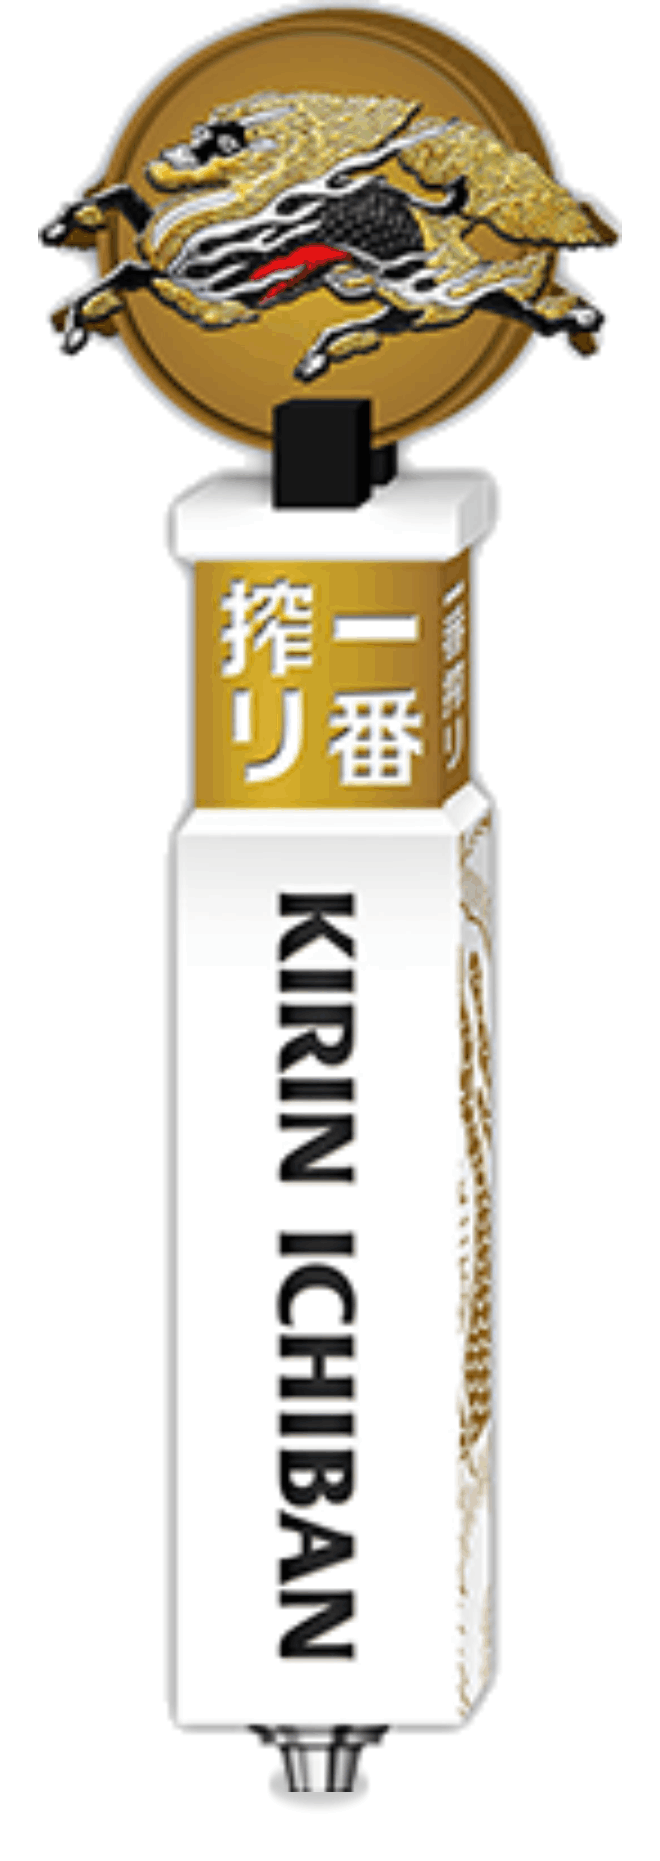 Kirin Ichiban has a beverage tapper!